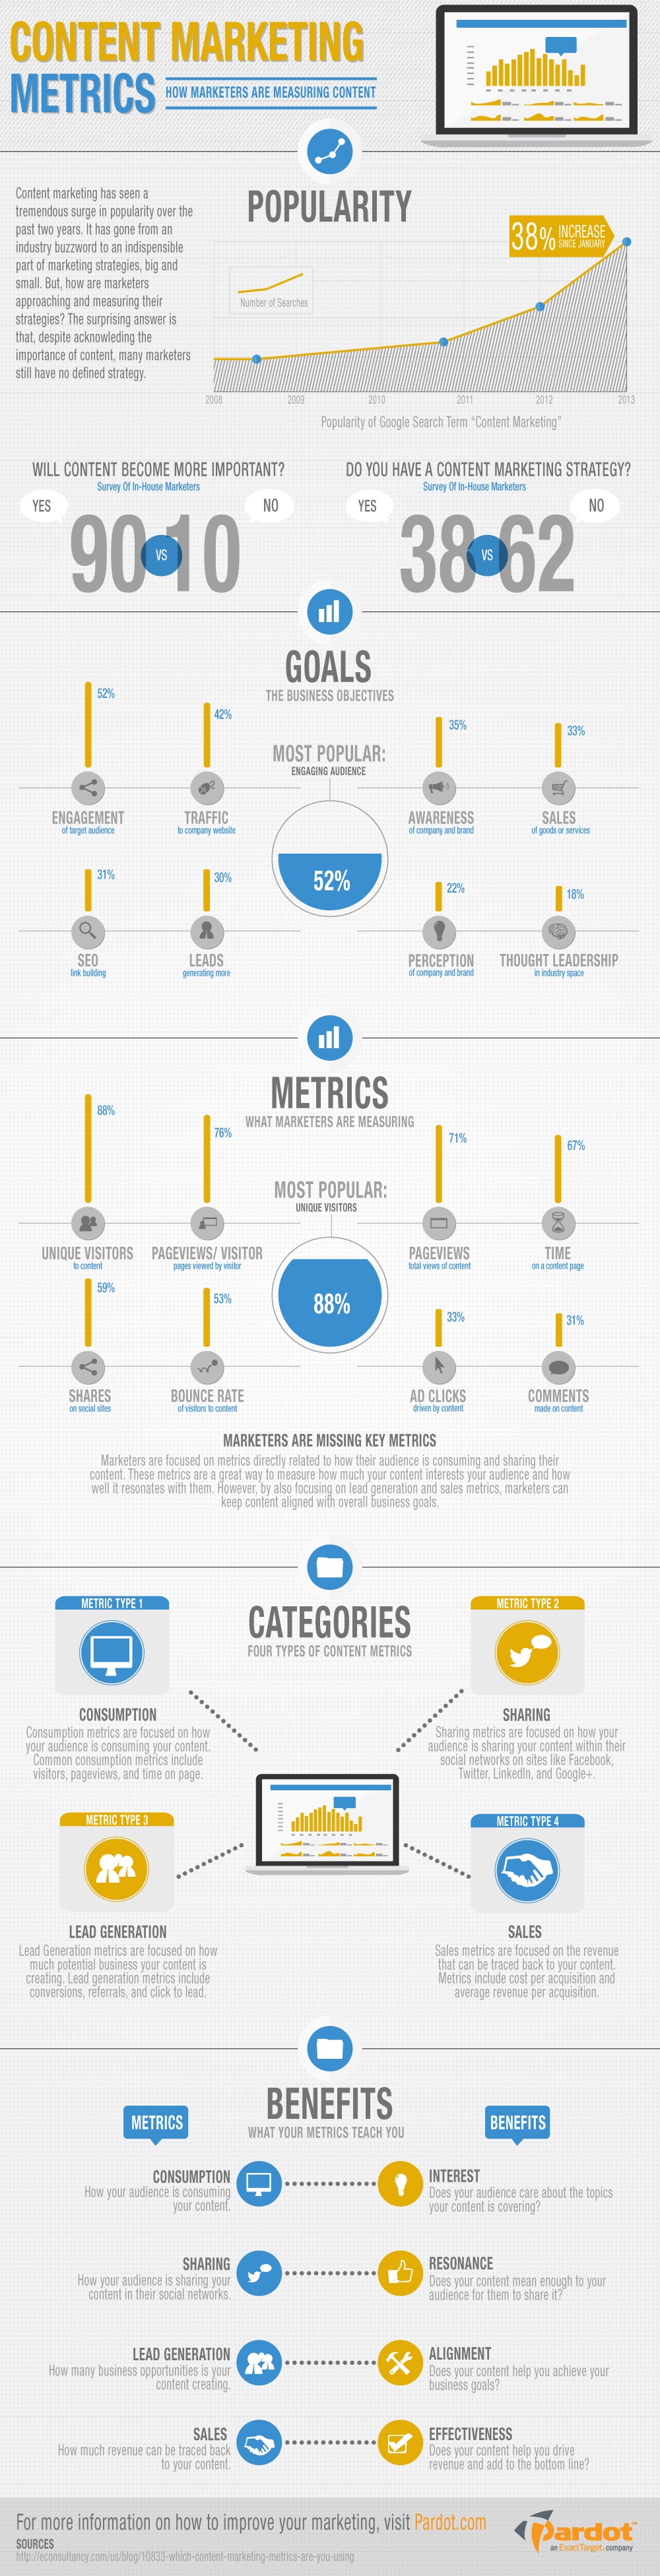 content-marketing-metrics-roi-infographic